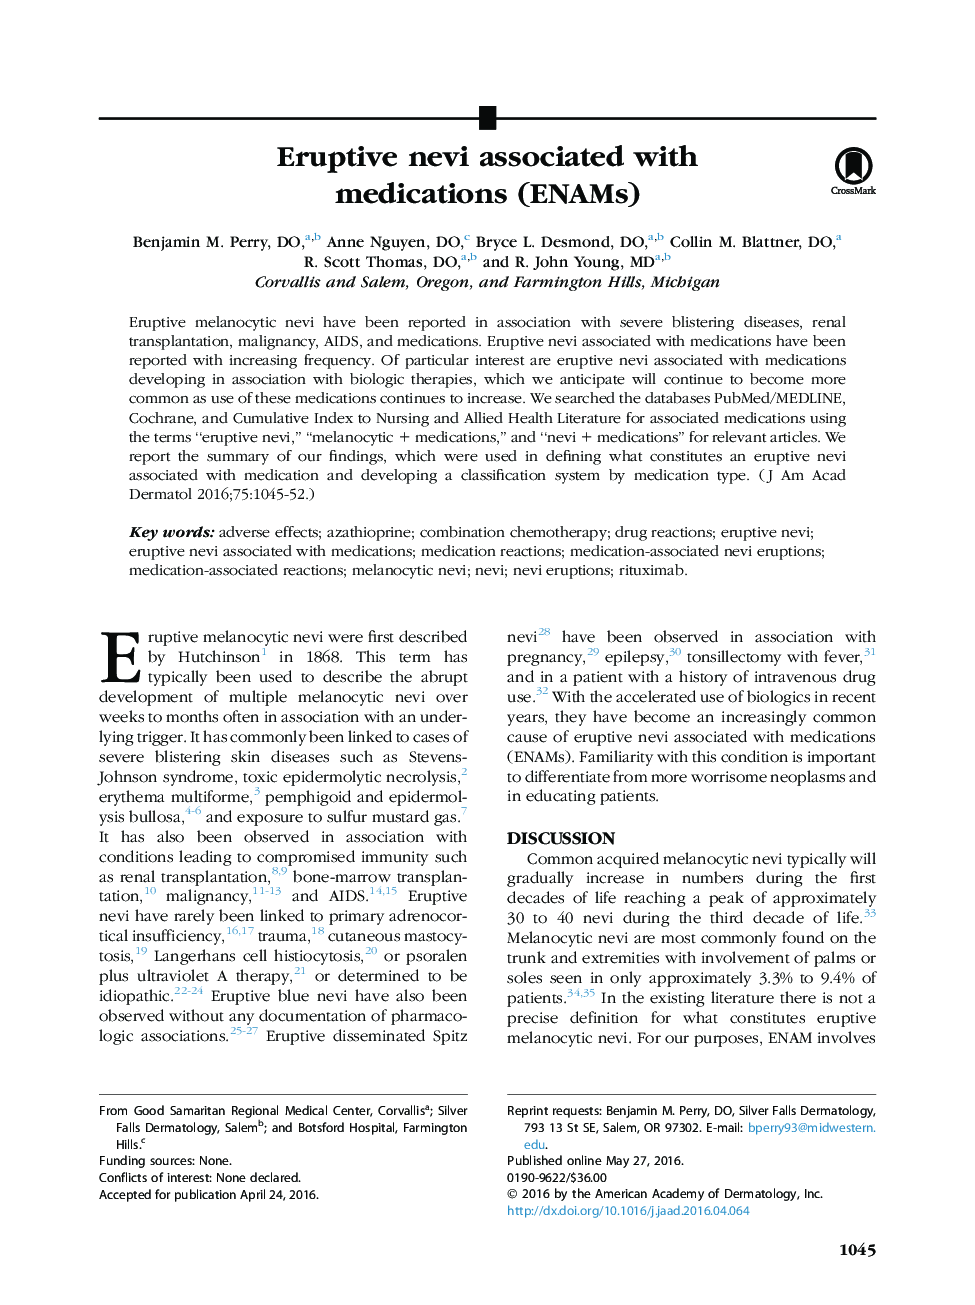 Eruptive nevi associated with medications (ENAMs)